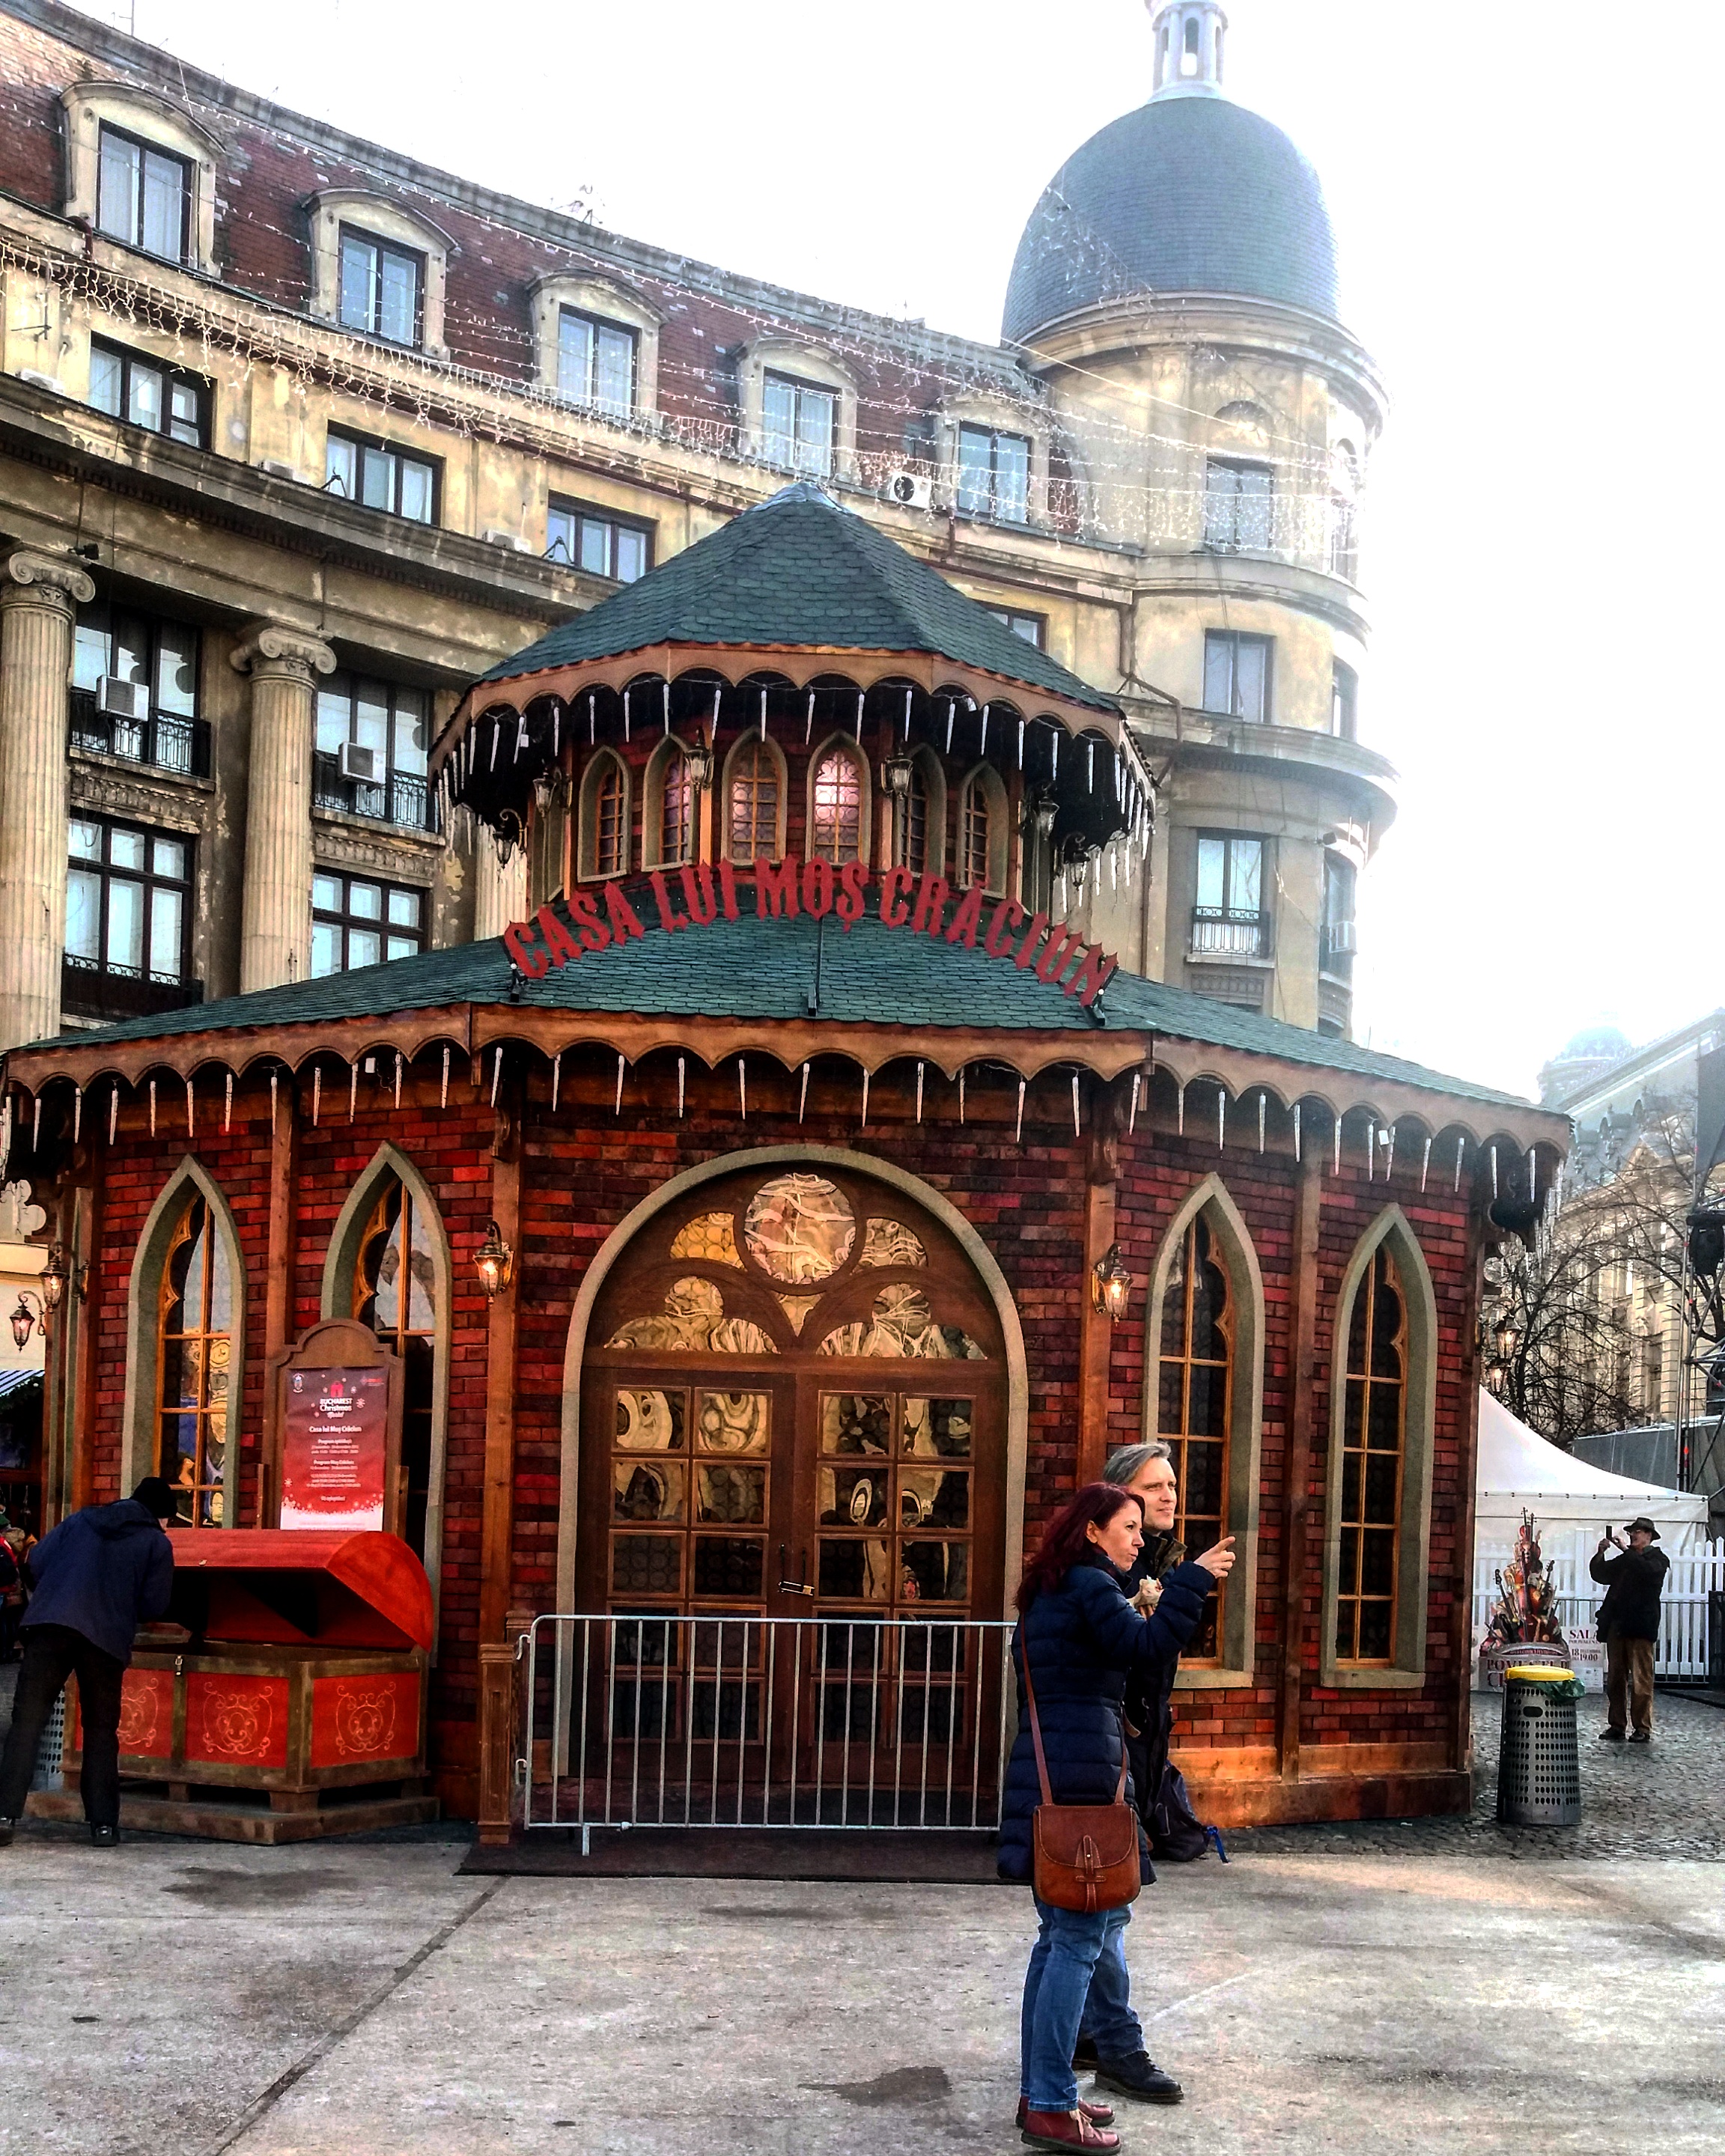 Bucharest Christmas Market - Santa Claus house